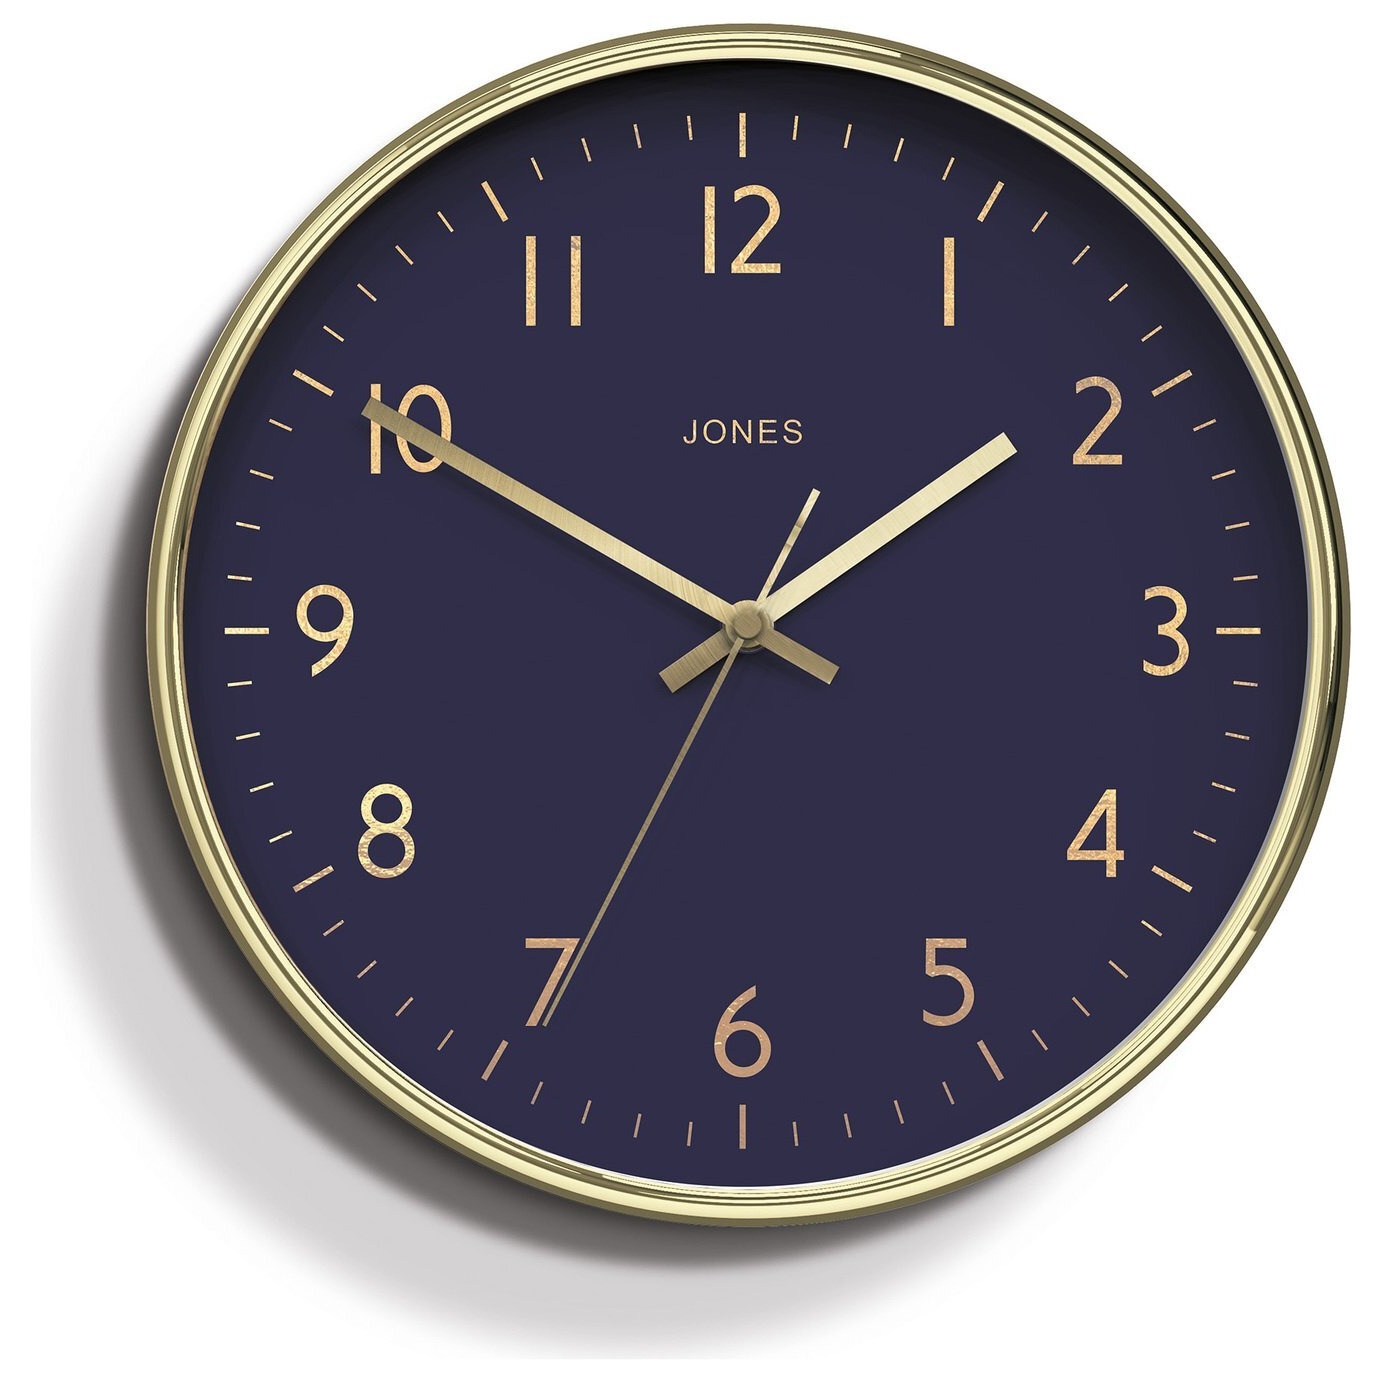 Jones Clocks Studio Analogue Wall Clock - Gold - image 1